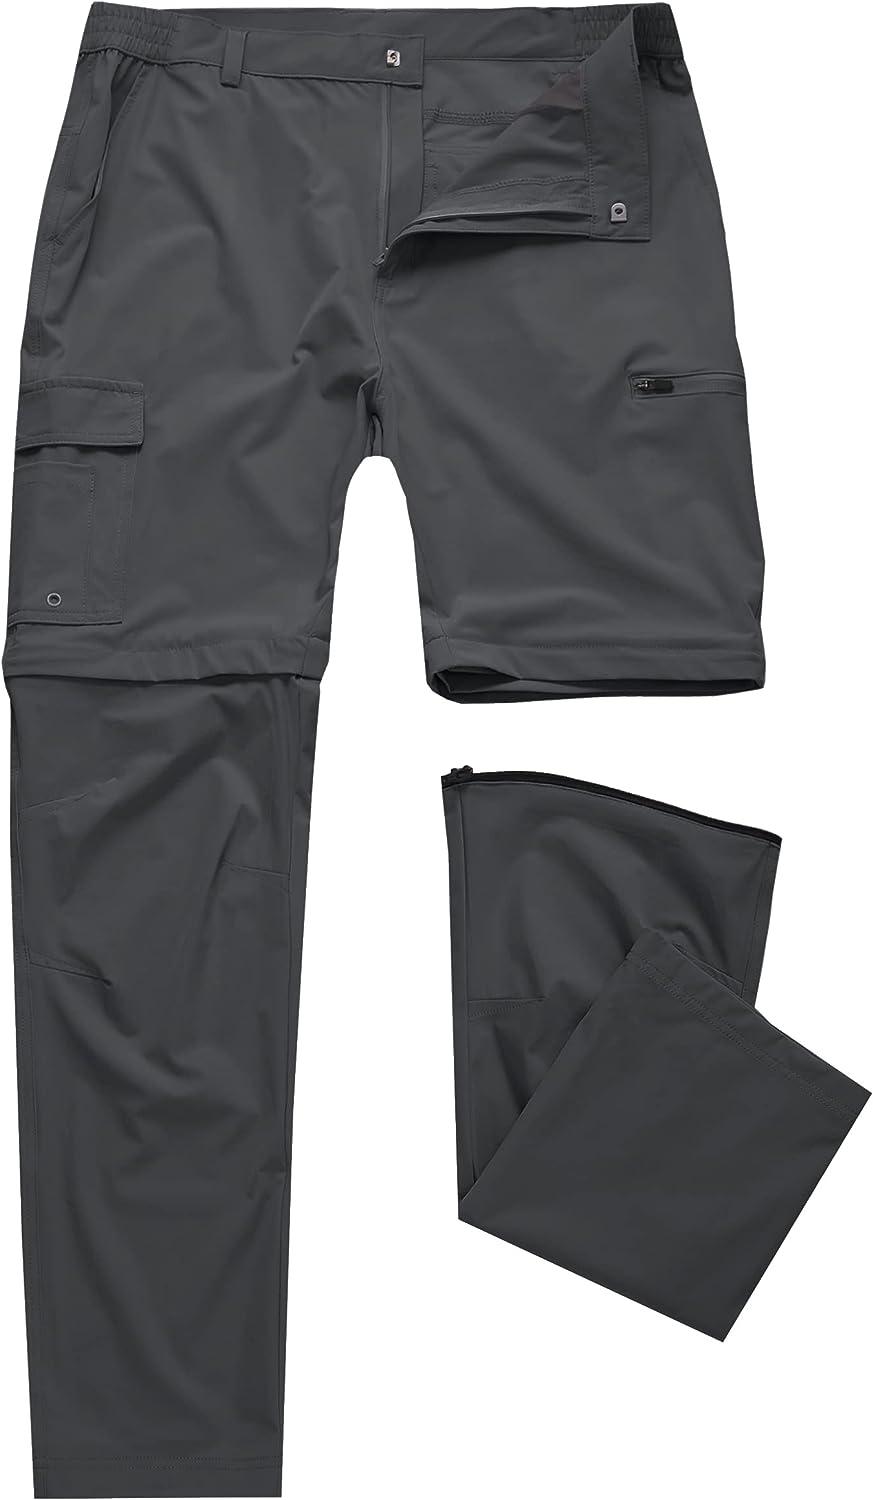 Marmot Arch Rock Convertible Pants - Men's | REI Co-op